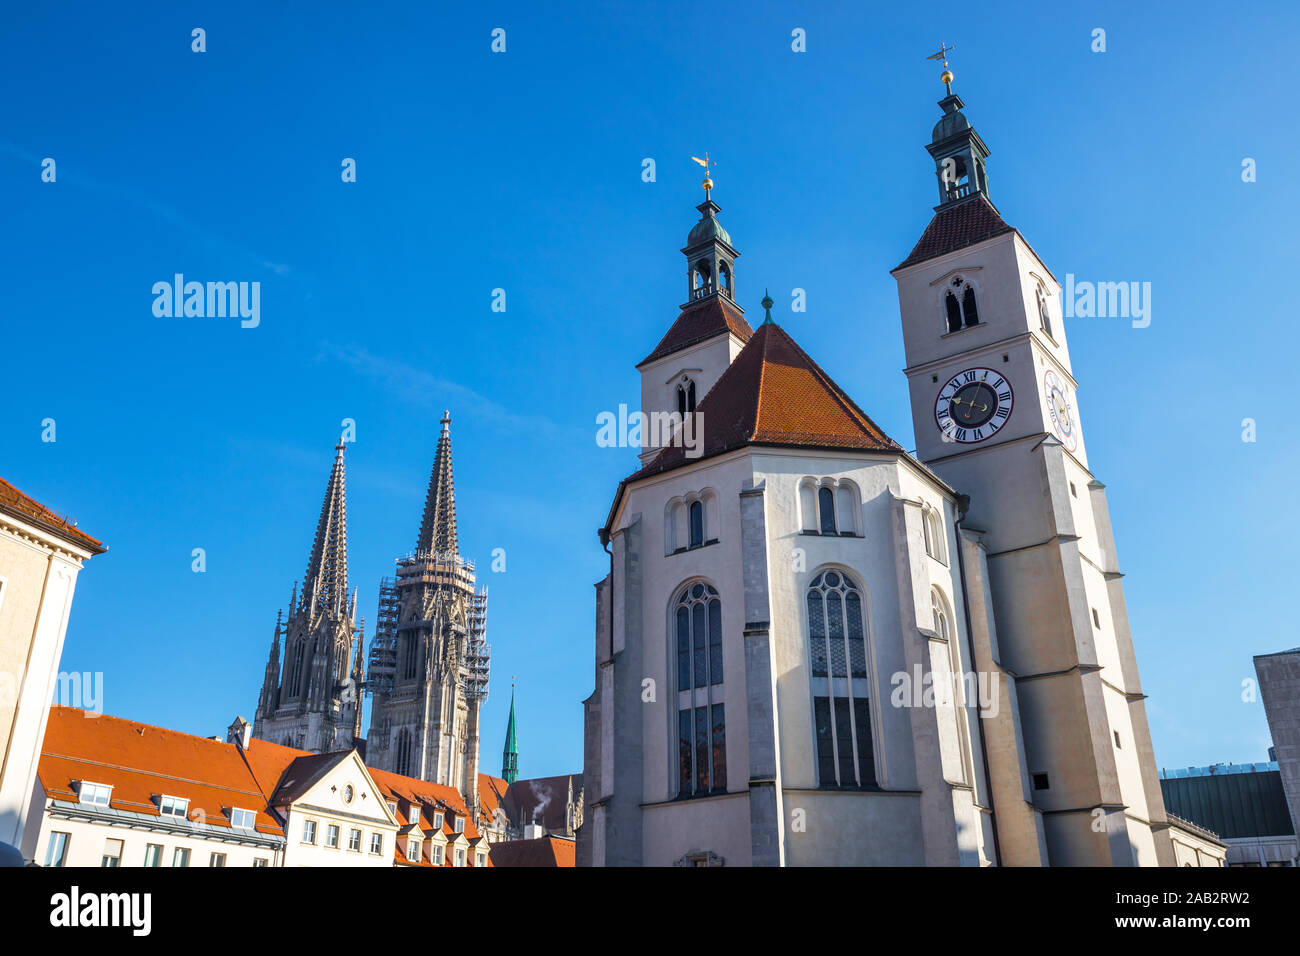 regensburg historic city in bavaria germany Stock Photo